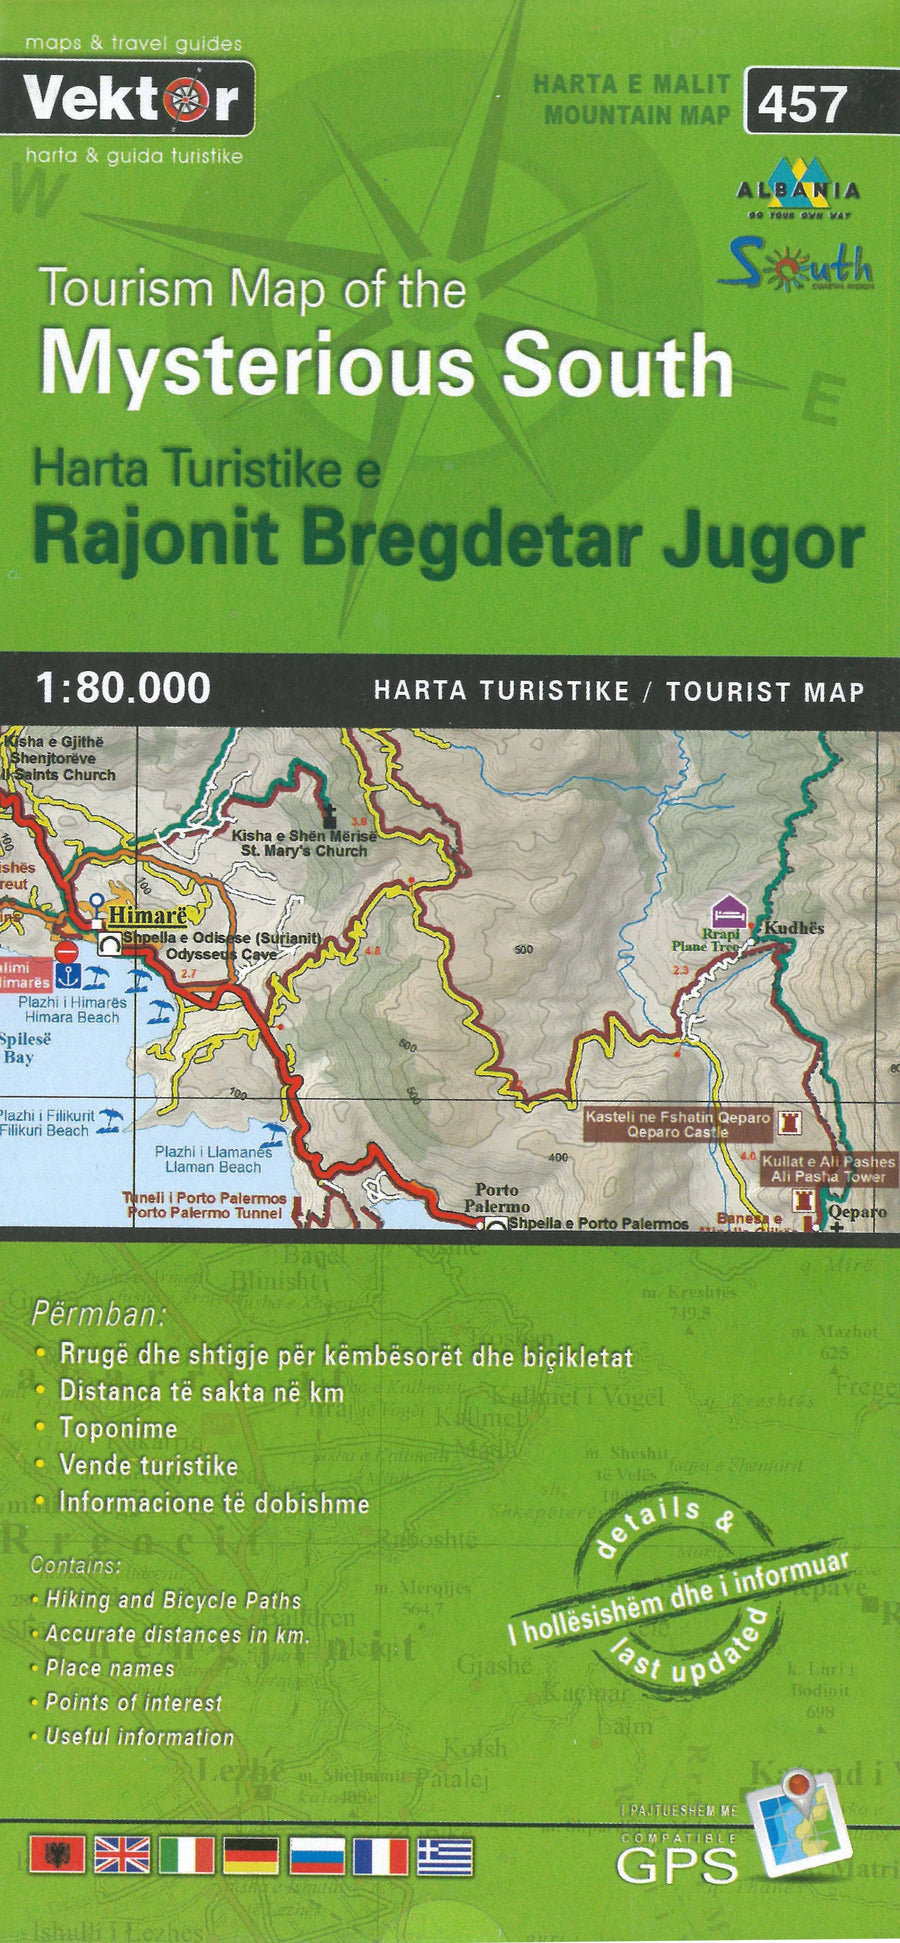 Carte de randonnée - Rajonit Bregdetar Jugor - Mysterious South (Albanie), n° 457 | Vektor carte pliée Vektor 